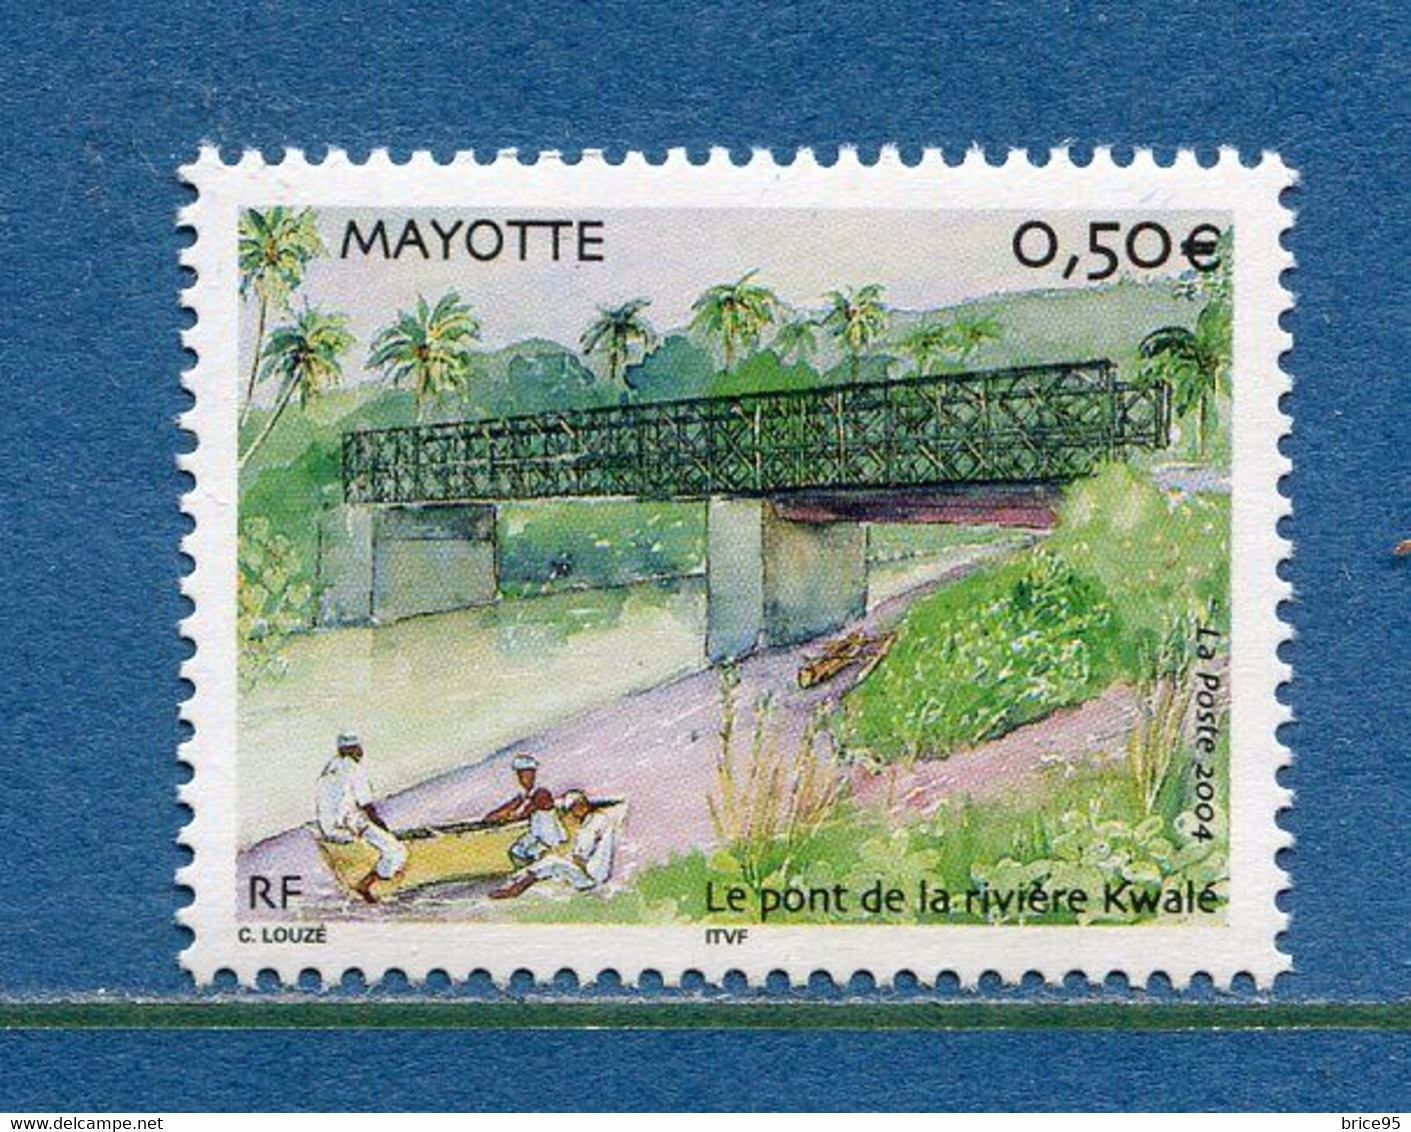 Mayotte - YT N° 166 ** - Neuf Sans Charnière - 2004 - Ungebraucht